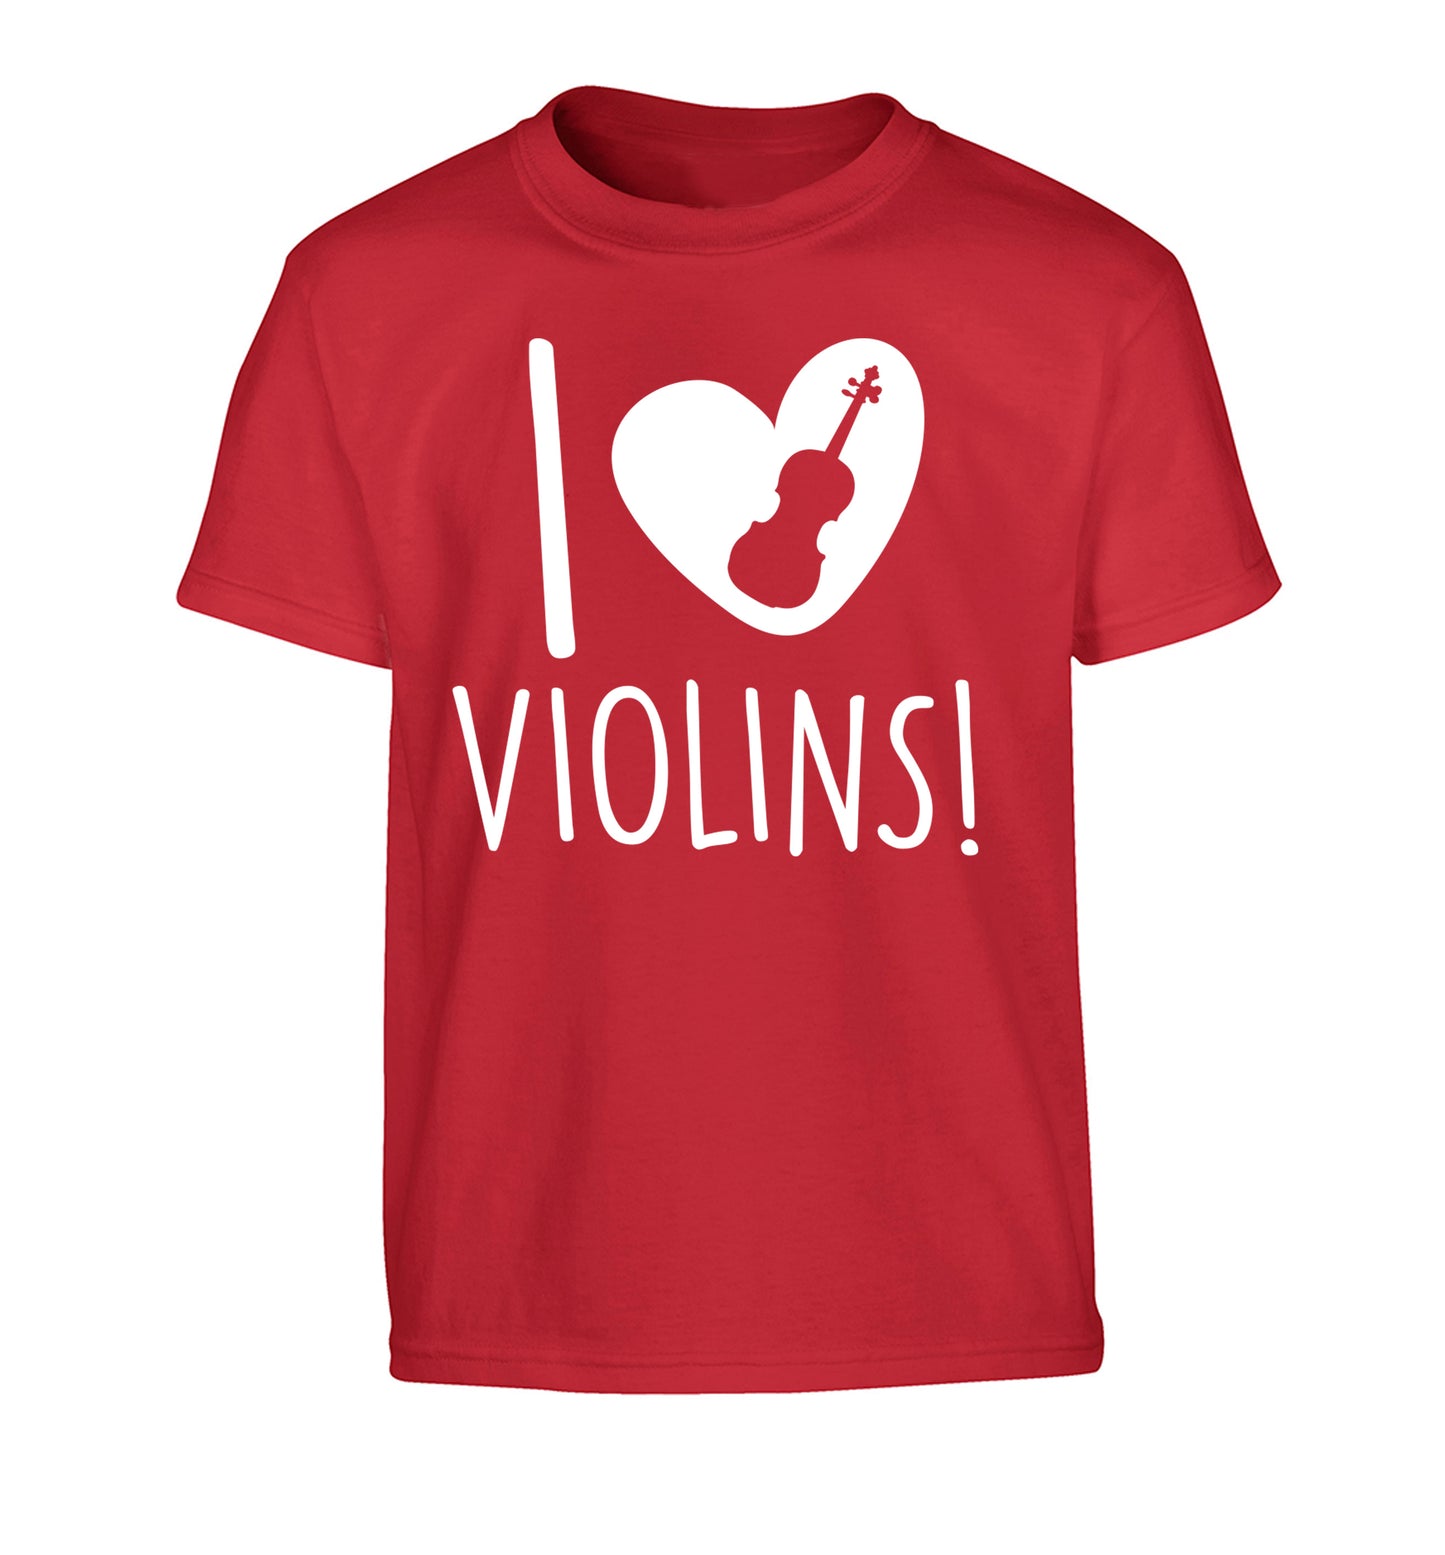 I Love Violins Children's red Tshirt 12-13 Years